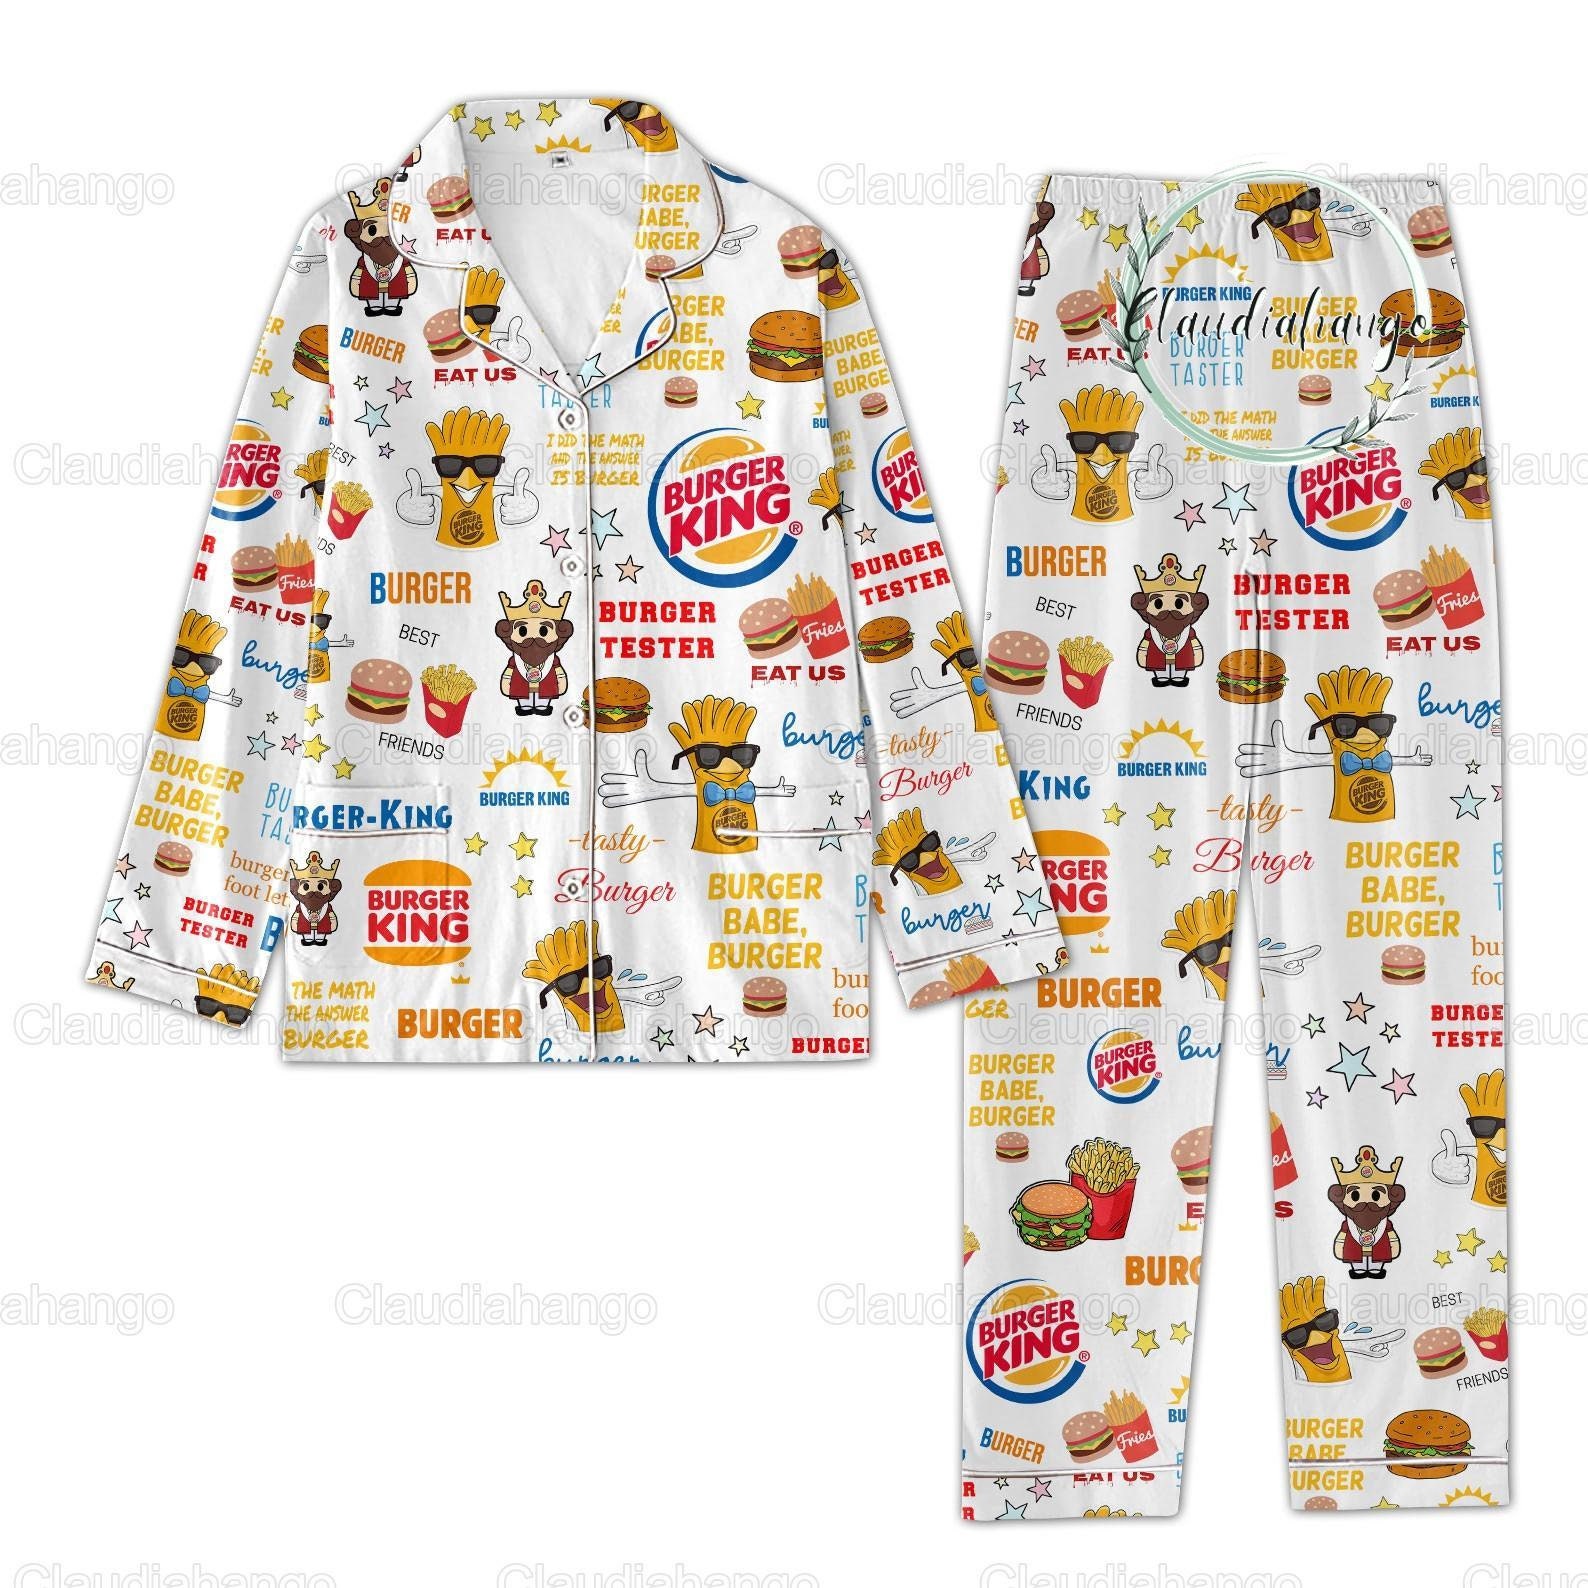 Discover Burger King Pajamas Set, Burger King Pajamas, Burger King Lover Holiday Pajamas